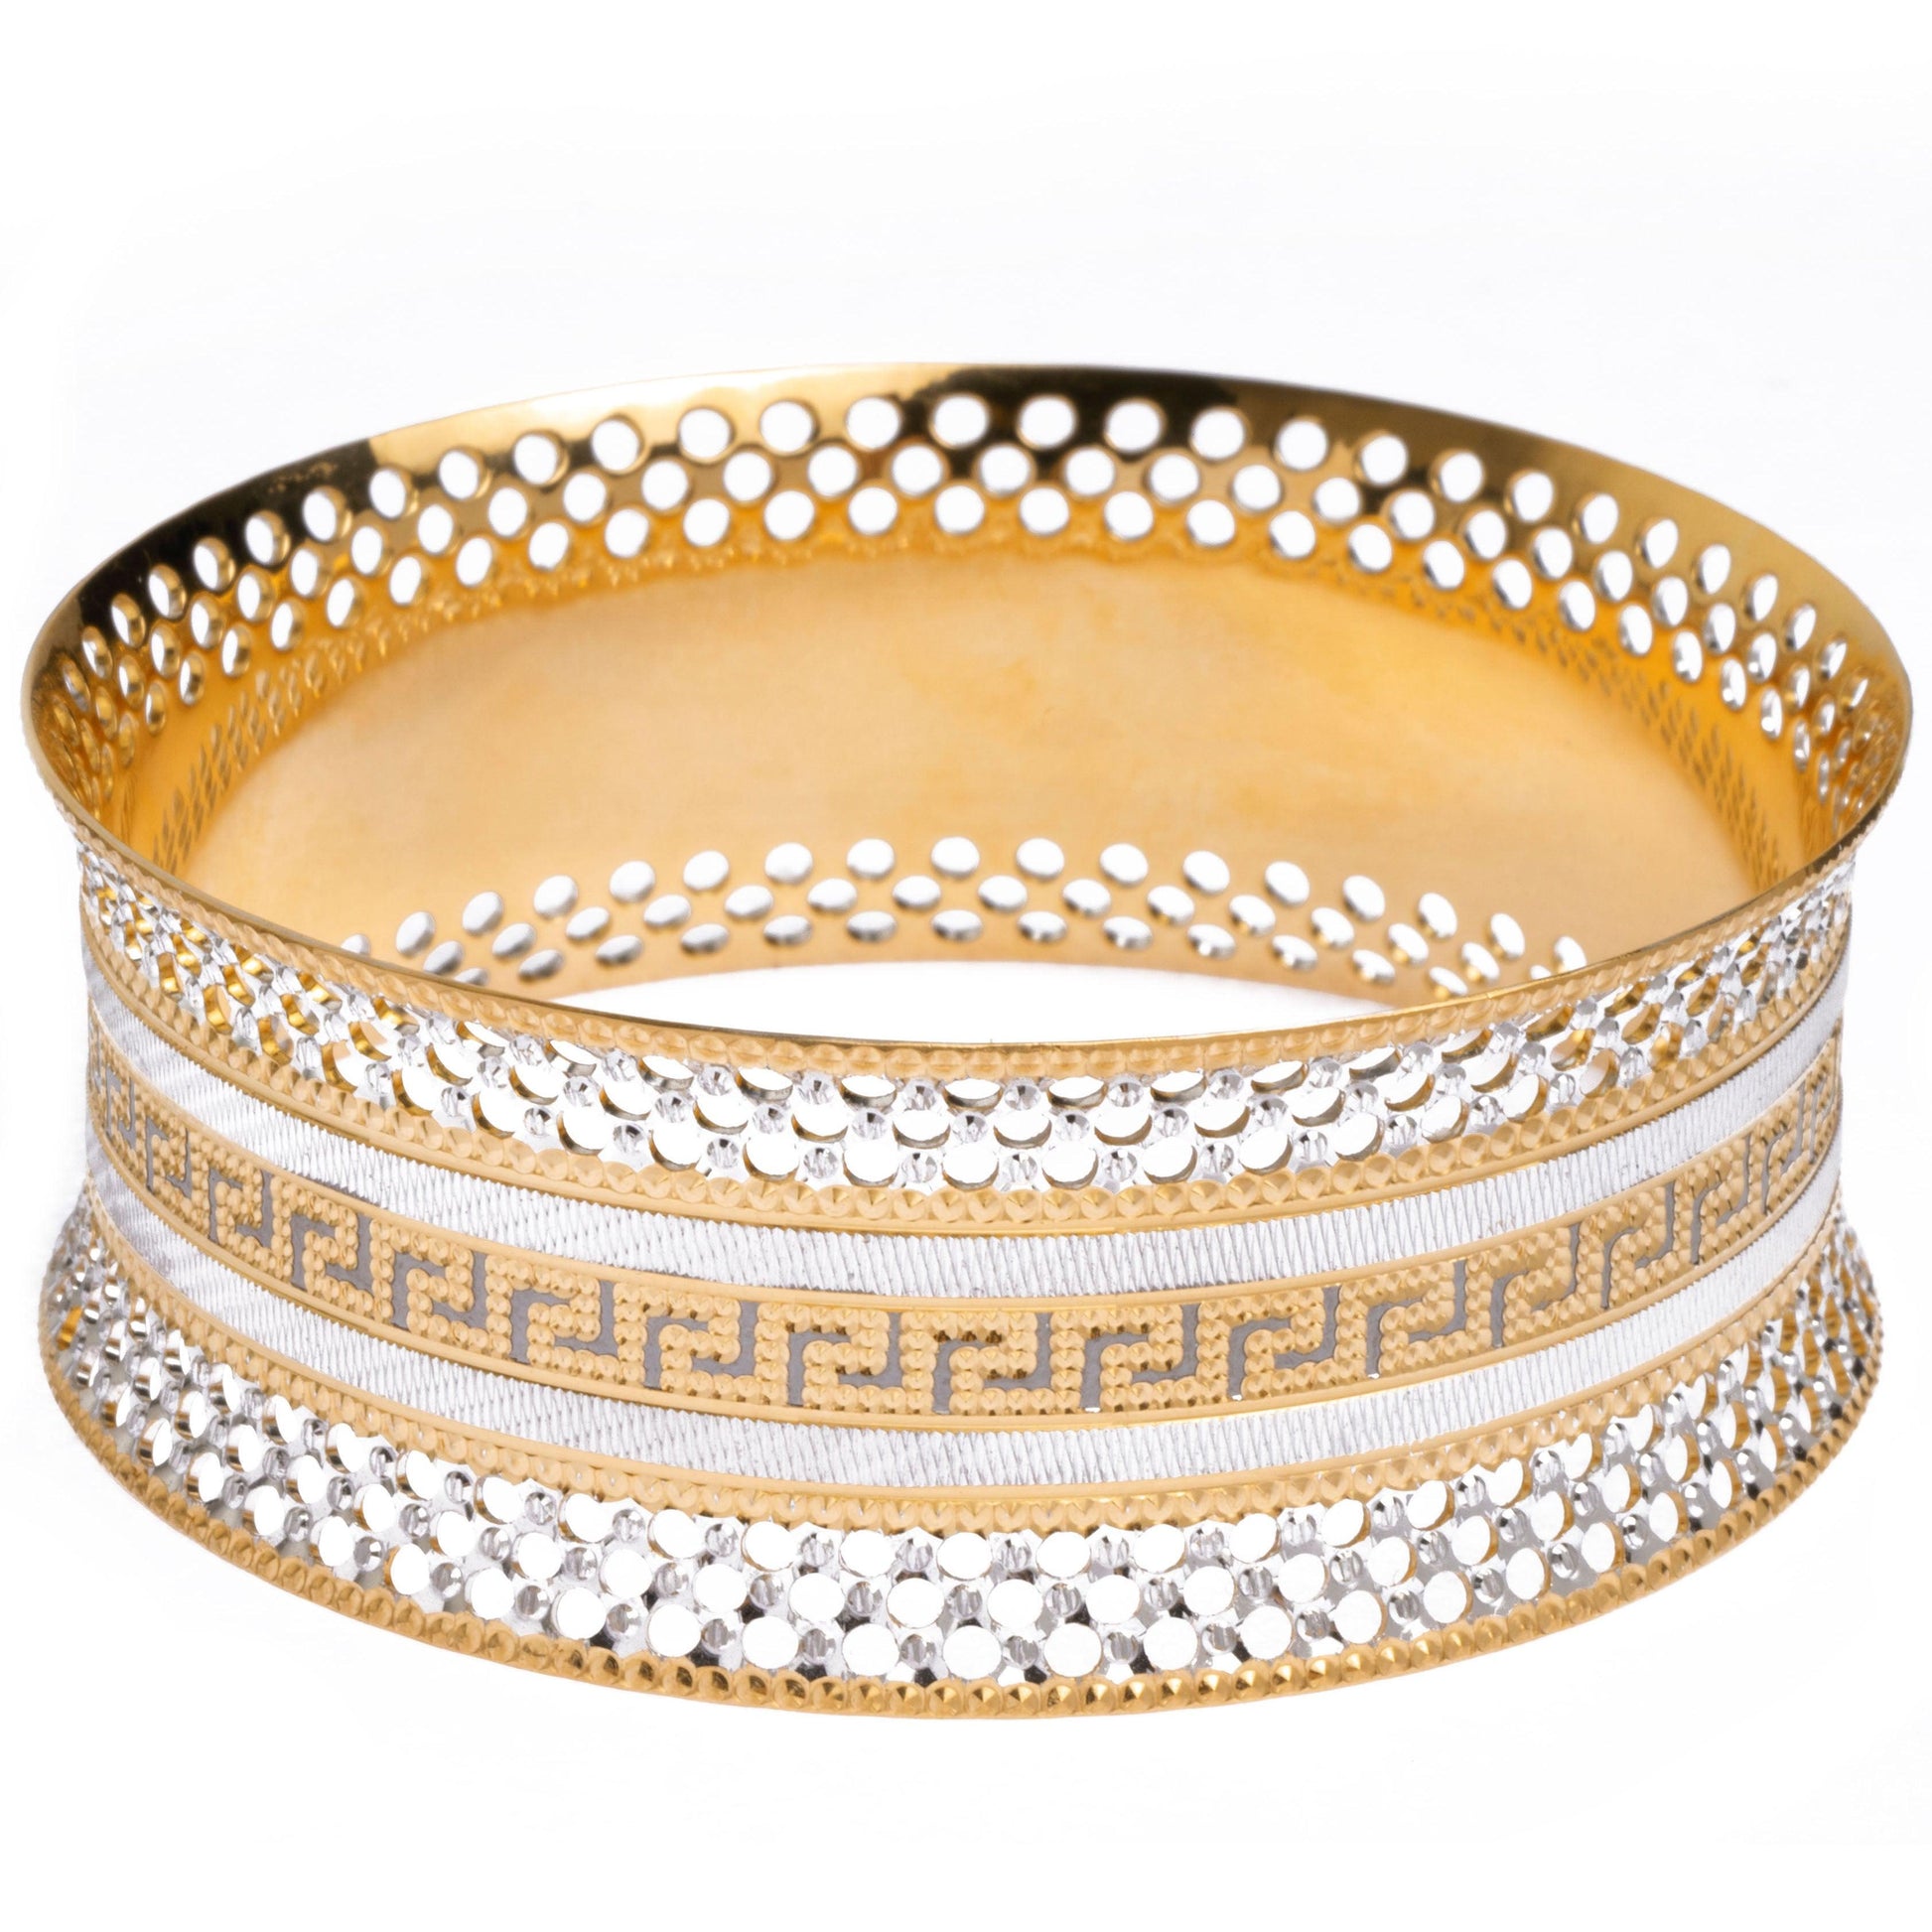 22ct Gold Cuff Bangle with Rhodium and Diamond Cut Design (57.9g) B-8319 - Minar Jewellers